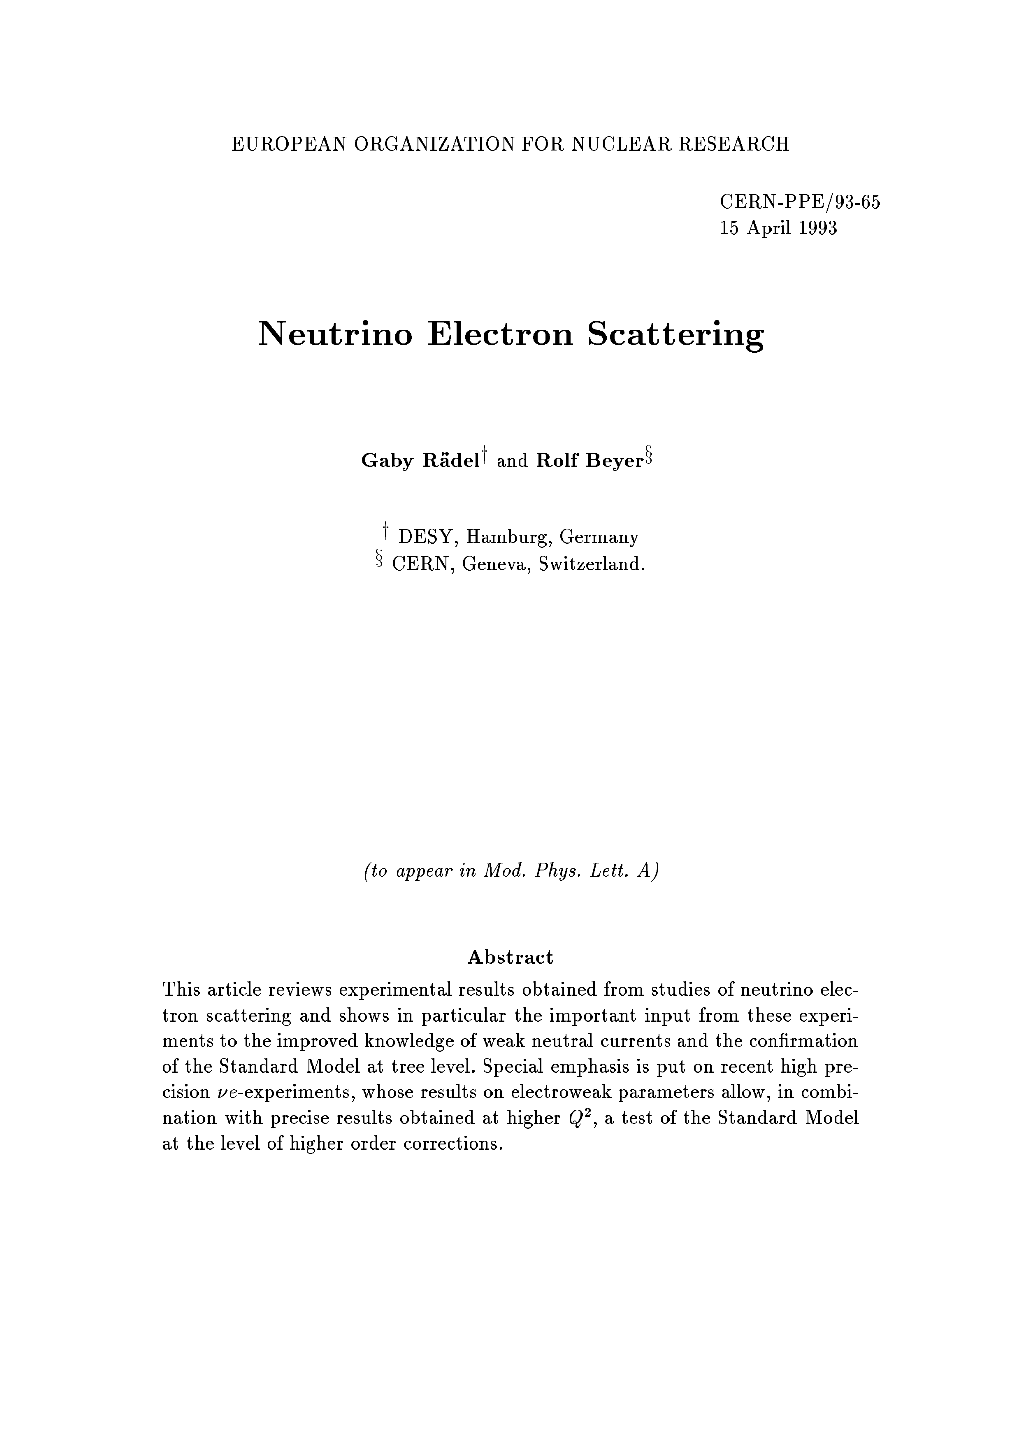 Neutrino Electron Scattering